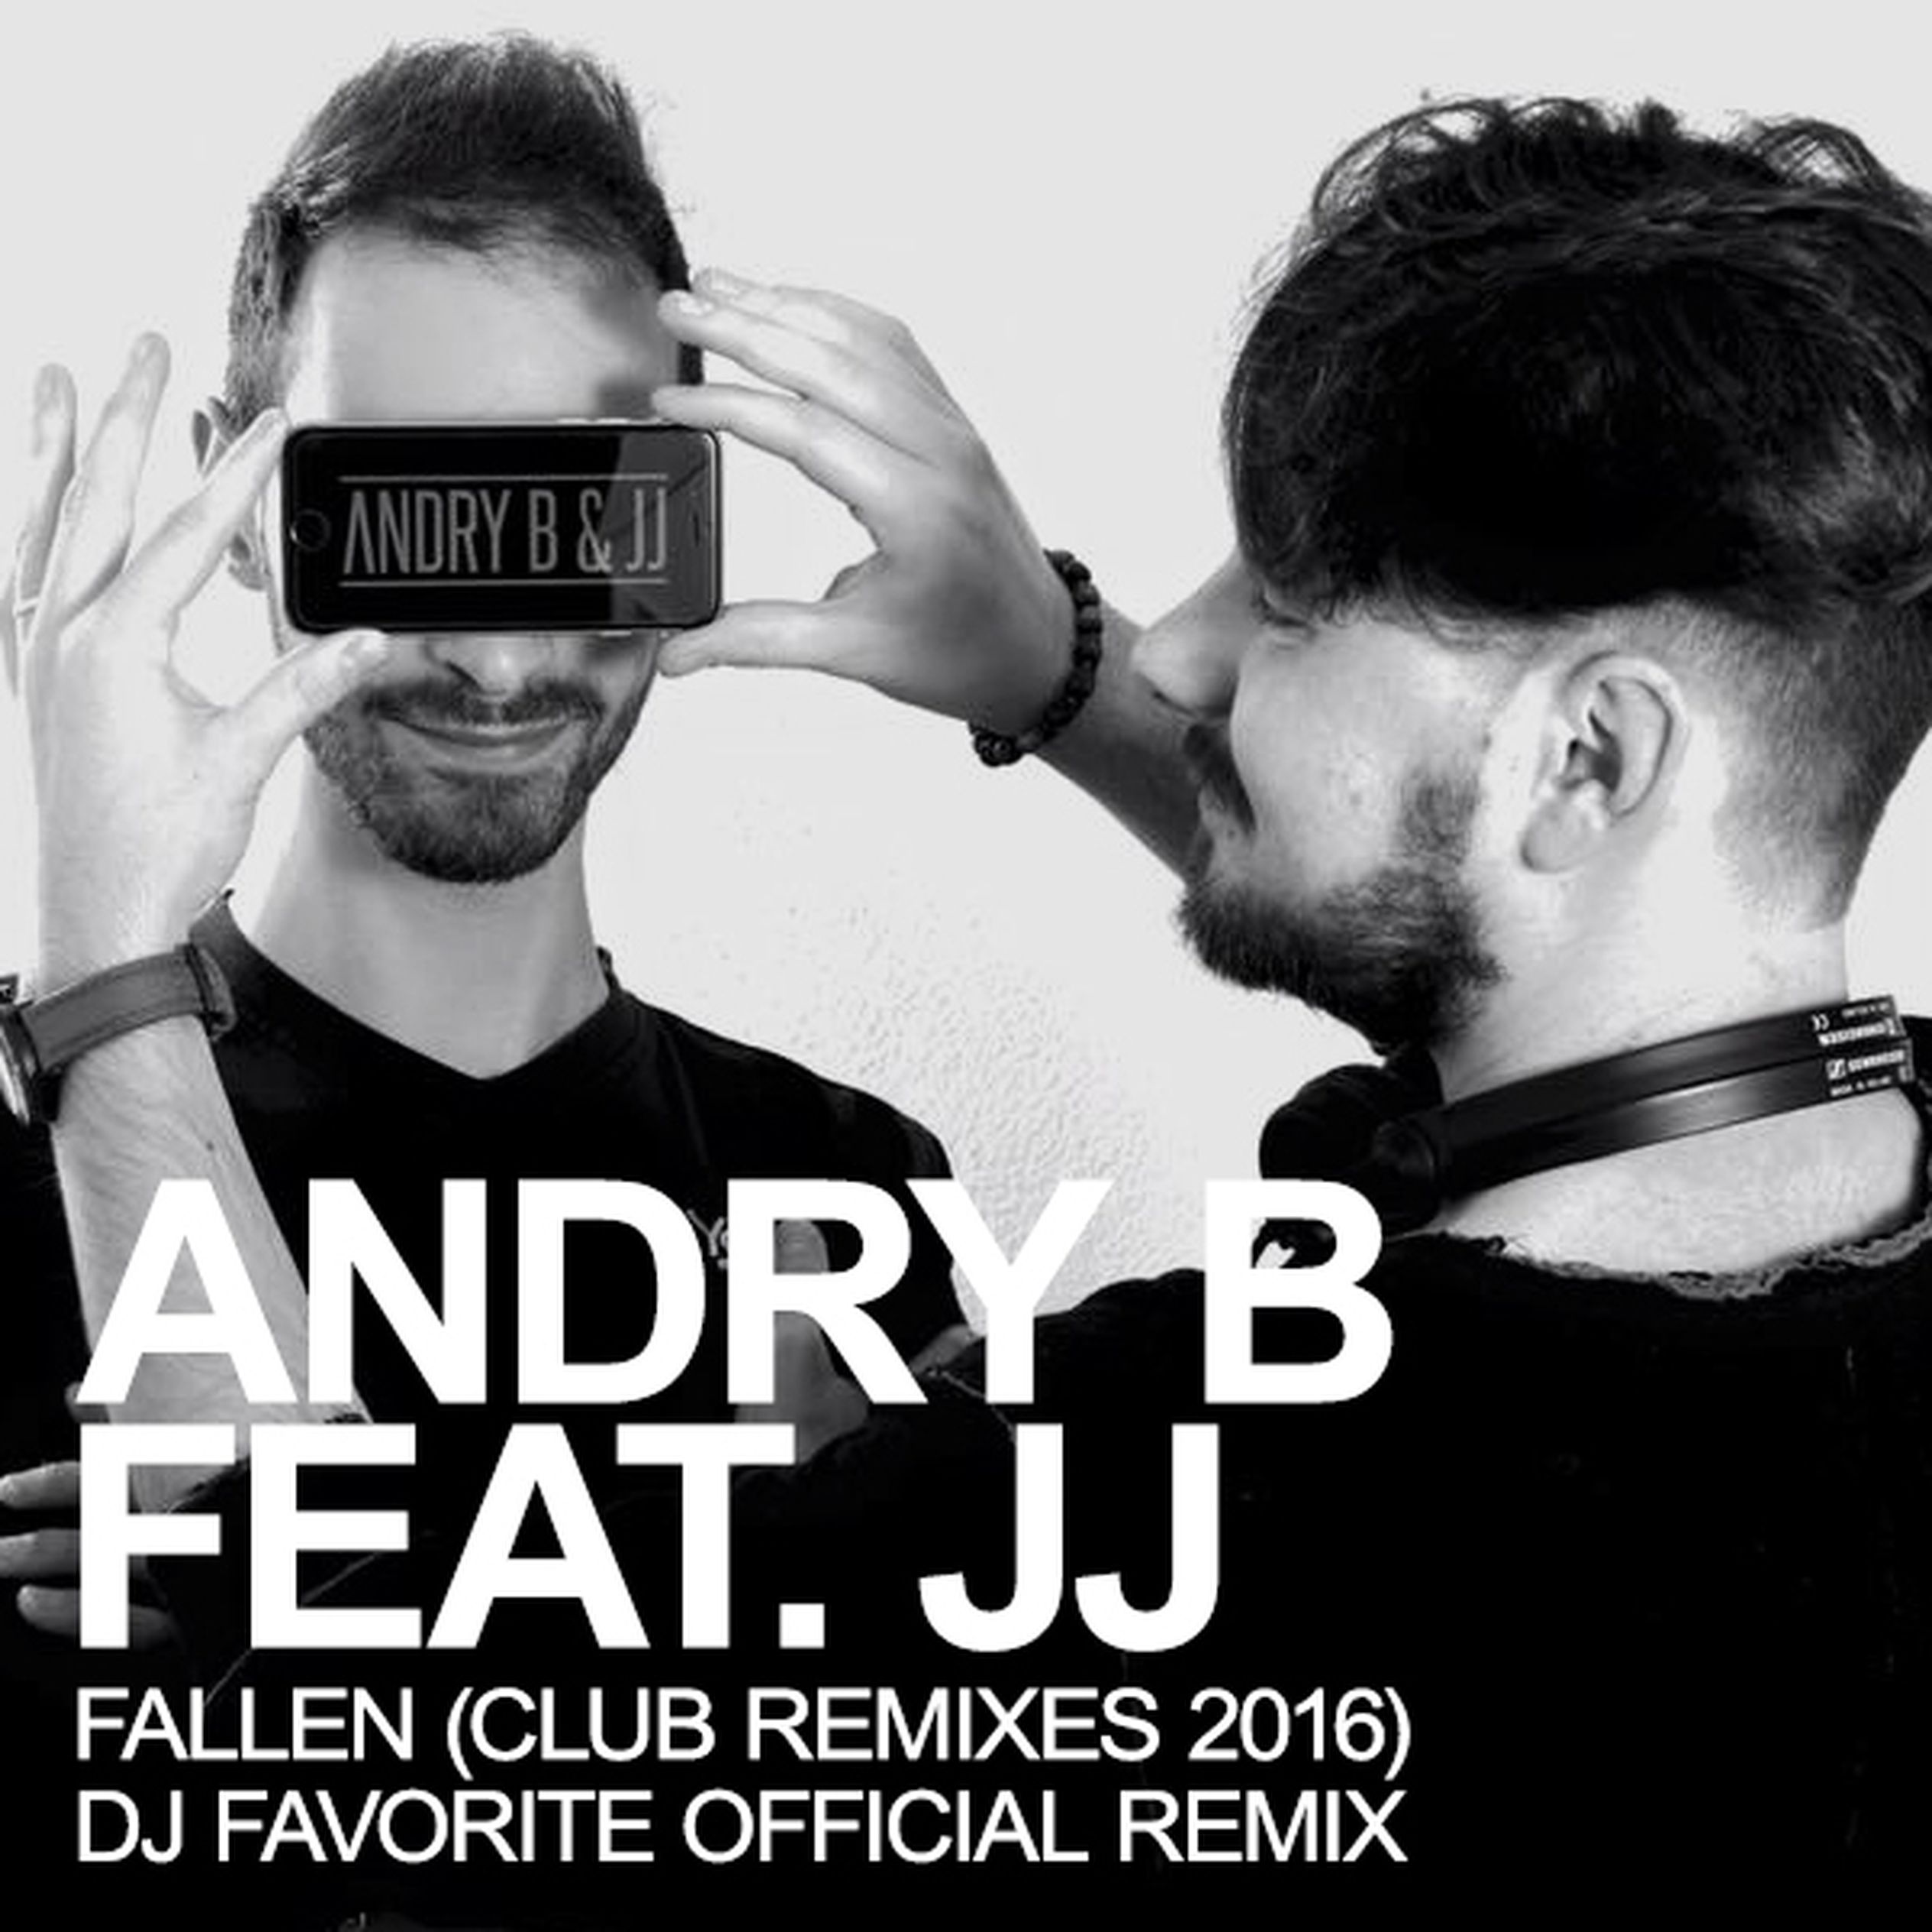 DJ favorite Official Remixes. Fallin DJ. Andry b., JJ - Fallen (DJ Antonio Remix).mp3 обложка альбома. Диджей Fallen рок Хаус. Deep remix mp3